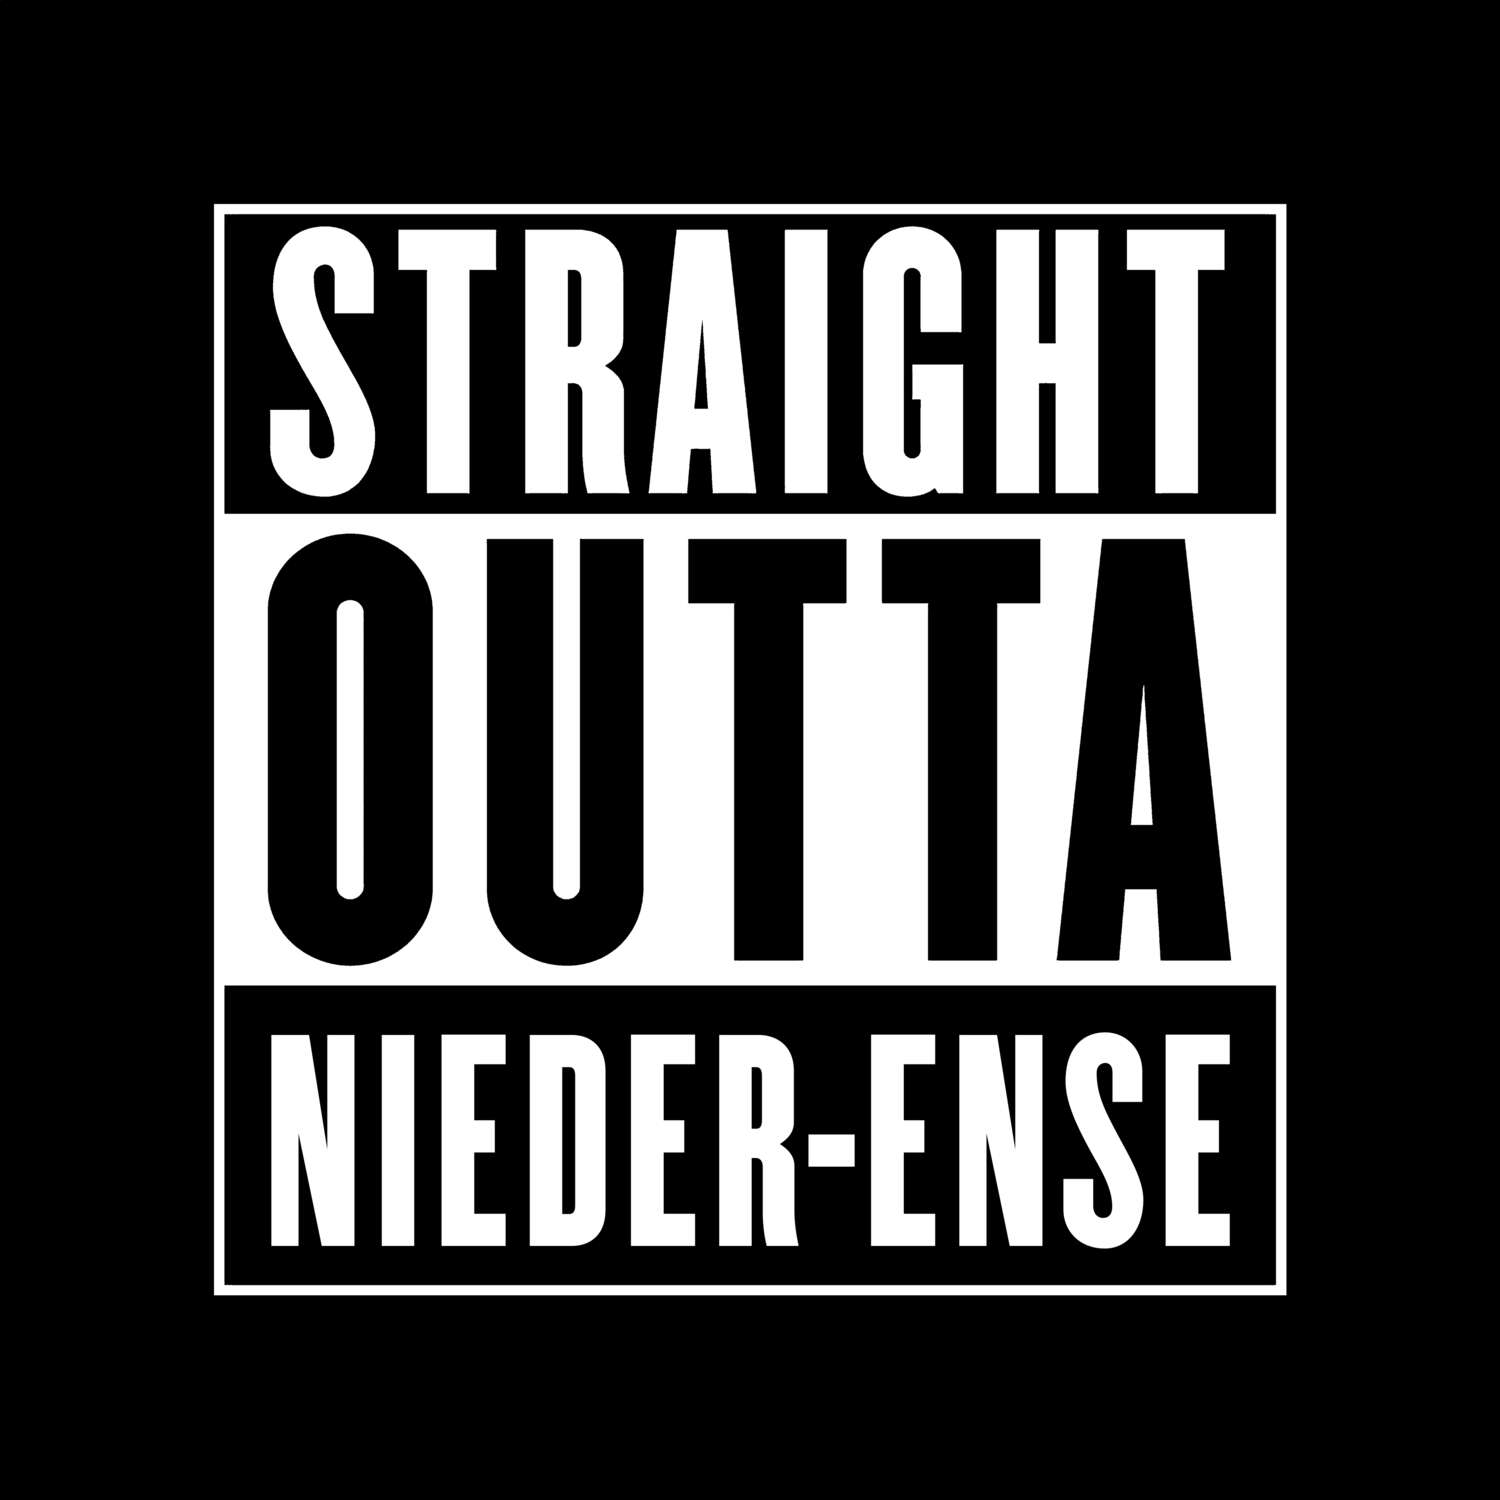 Nieder-Ense T-Shirt »Straight Outta«